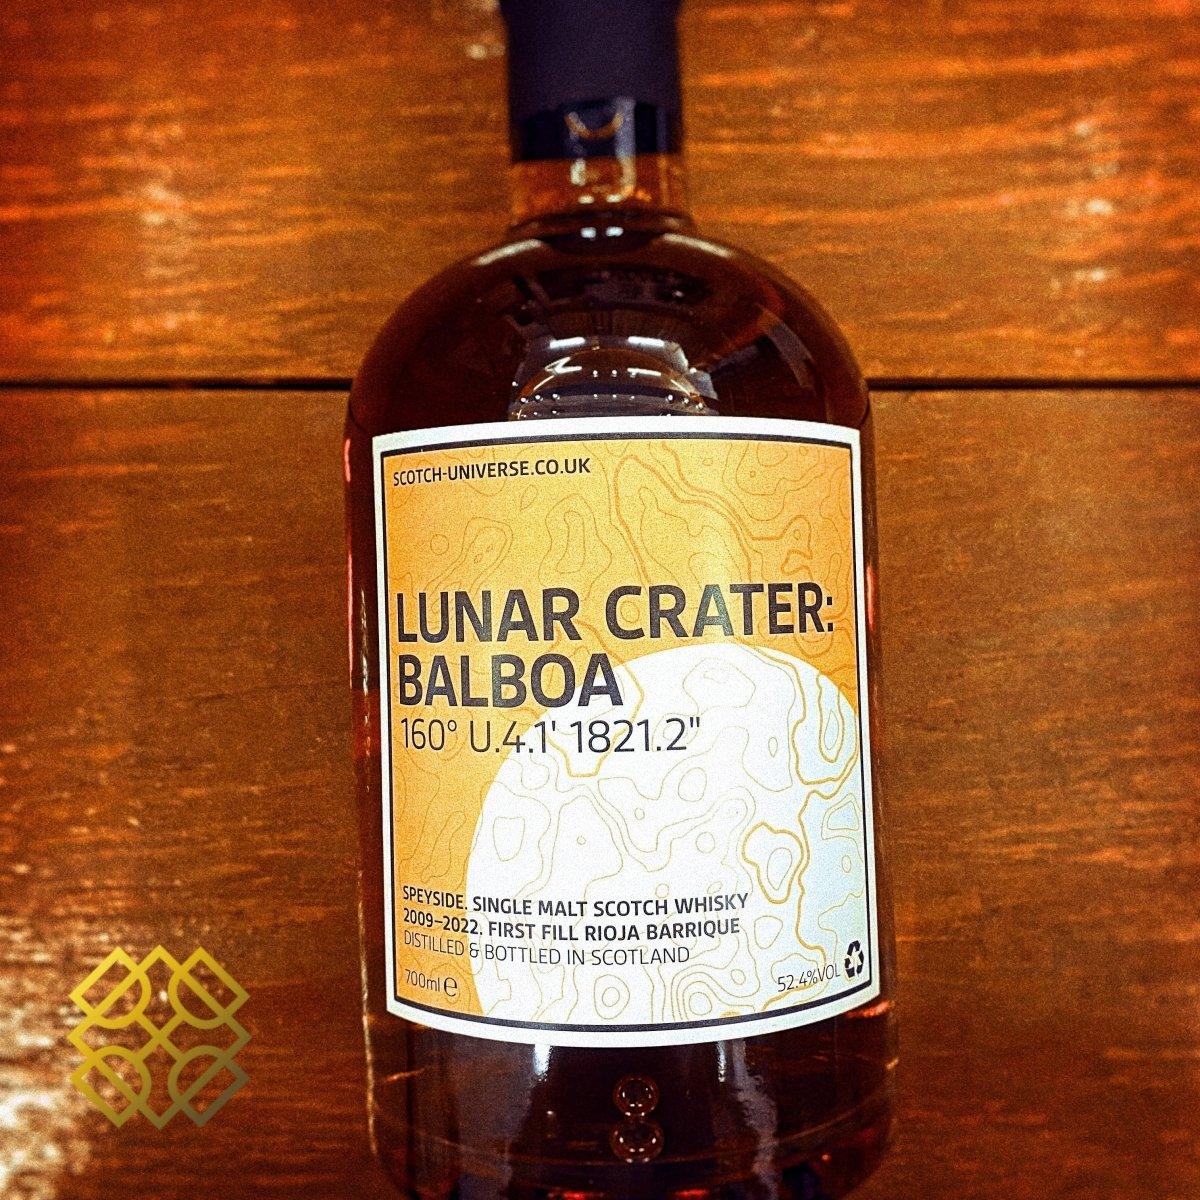 Scotch Universe Lunar Crater: Balboa (Linkwood) - 13YO, 2009/2022, 52.4%  Type : Single malt whisky 威士忌